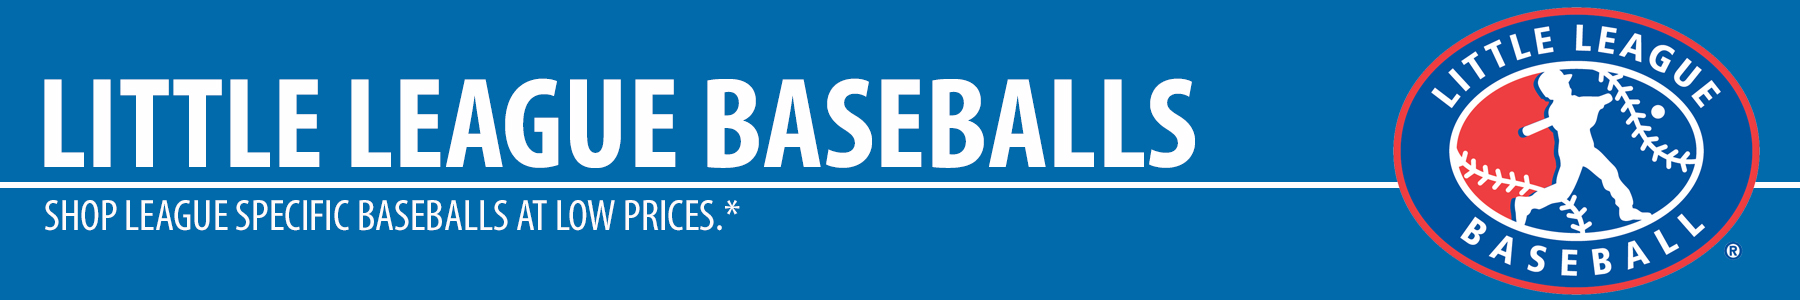 Little League Baseballs - Little League Leather Baseballs - Little League Game Baseballs